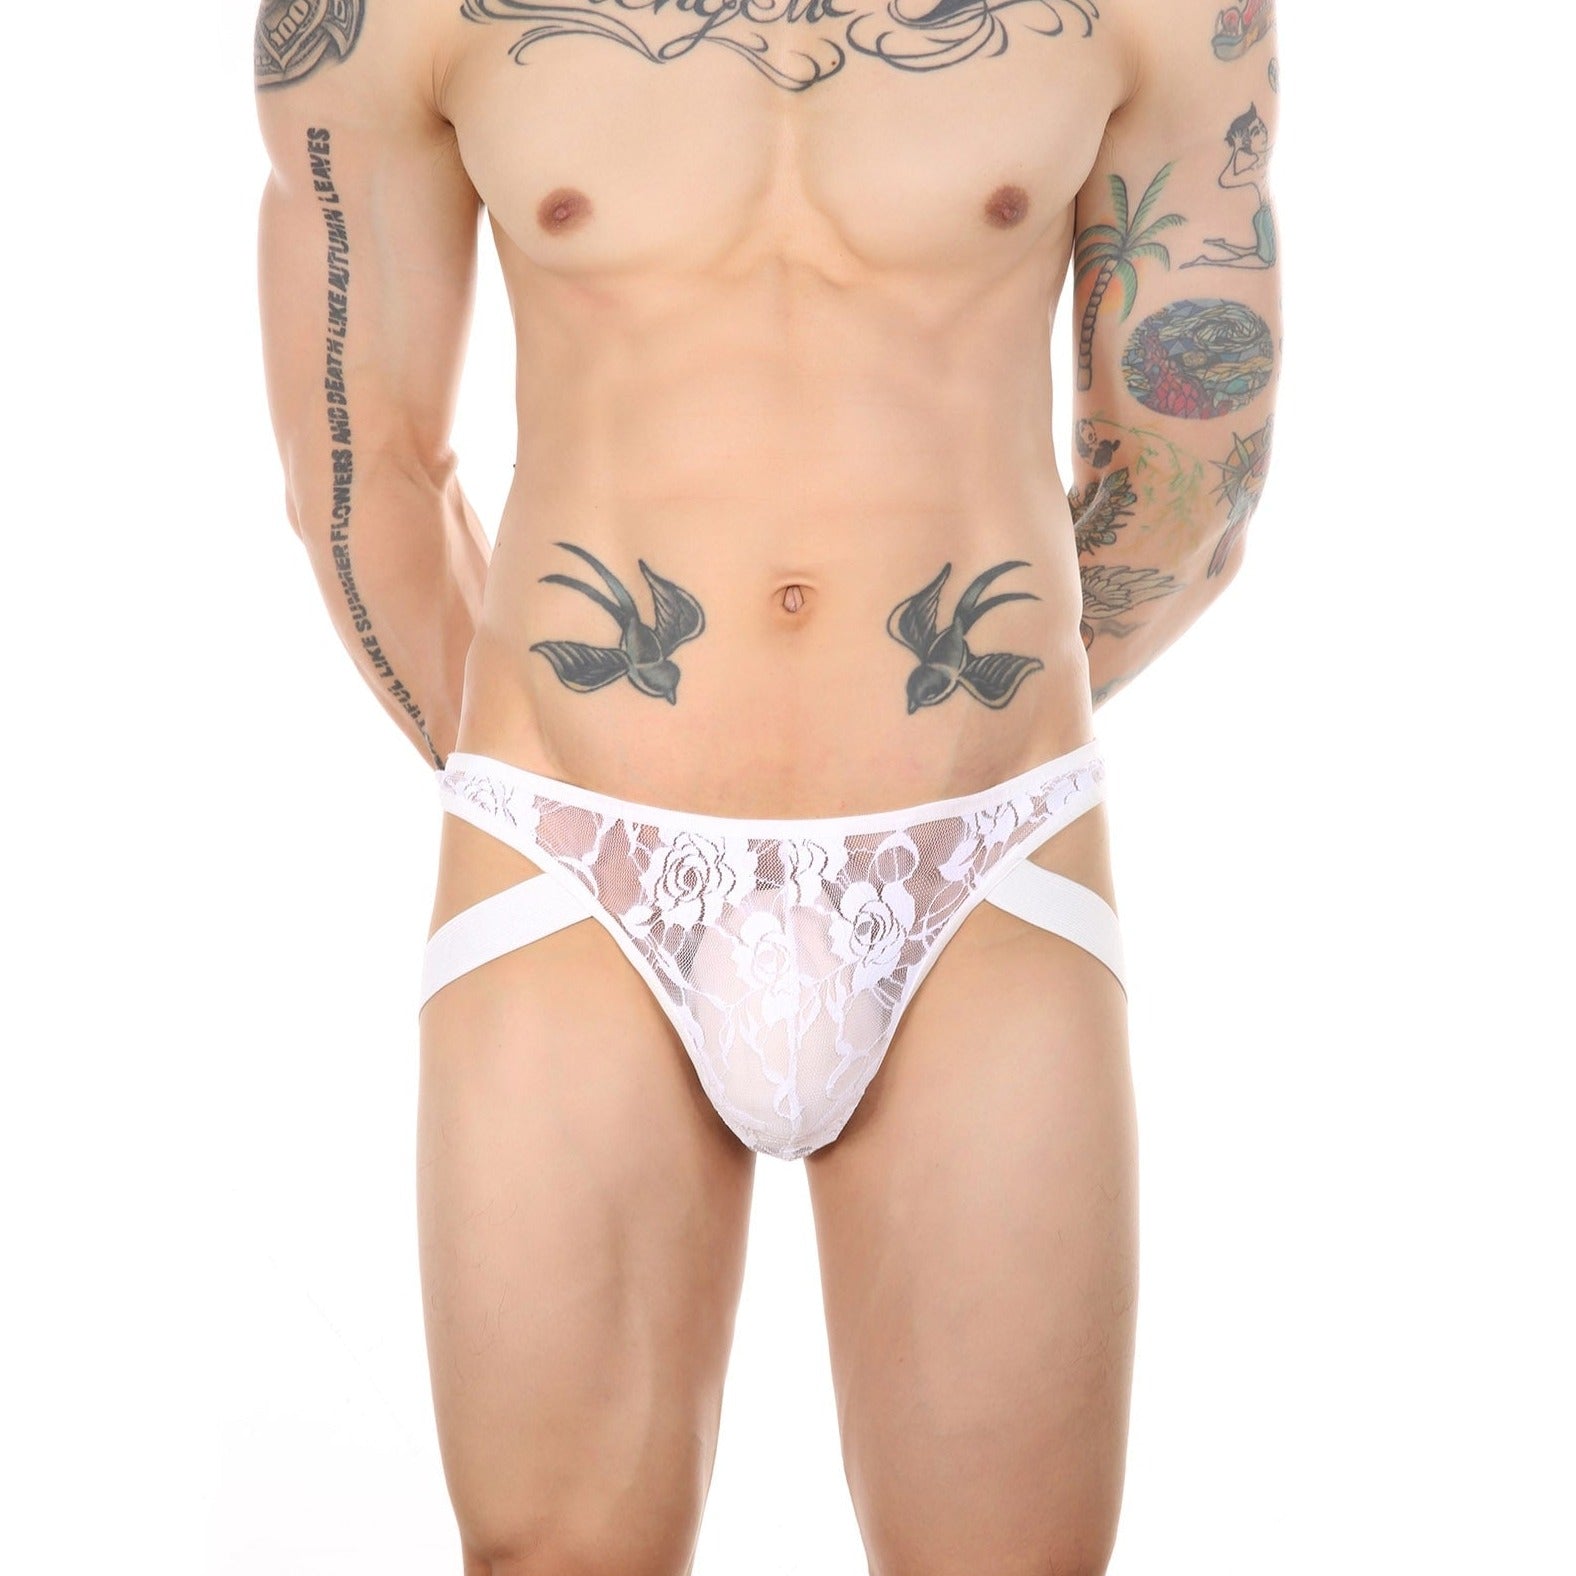 a sexy gay man in white Men's Lace Briefs with Leg Strap - pridevoyageshop.com - gay men’s underwear and swimwear